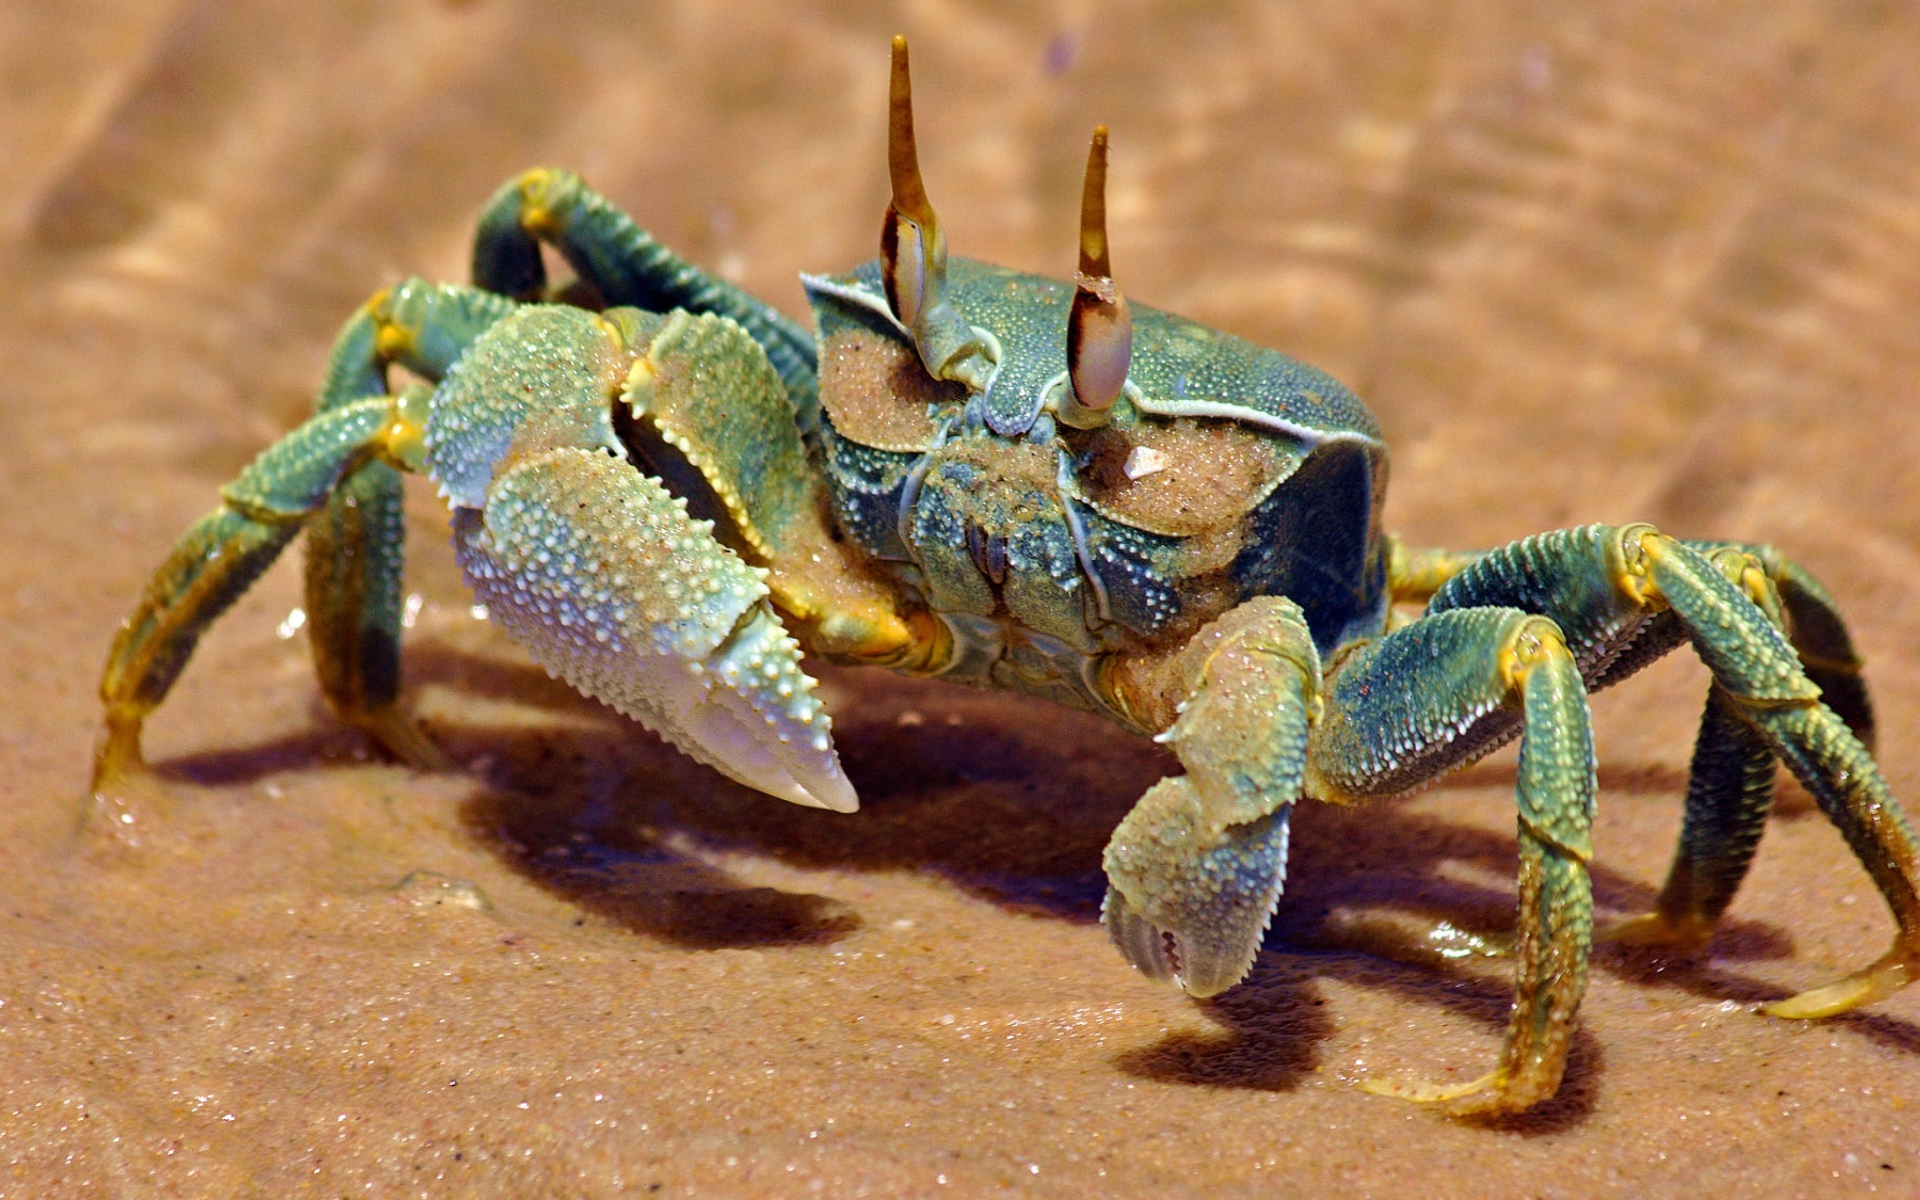 Big green crab on the yellow sand